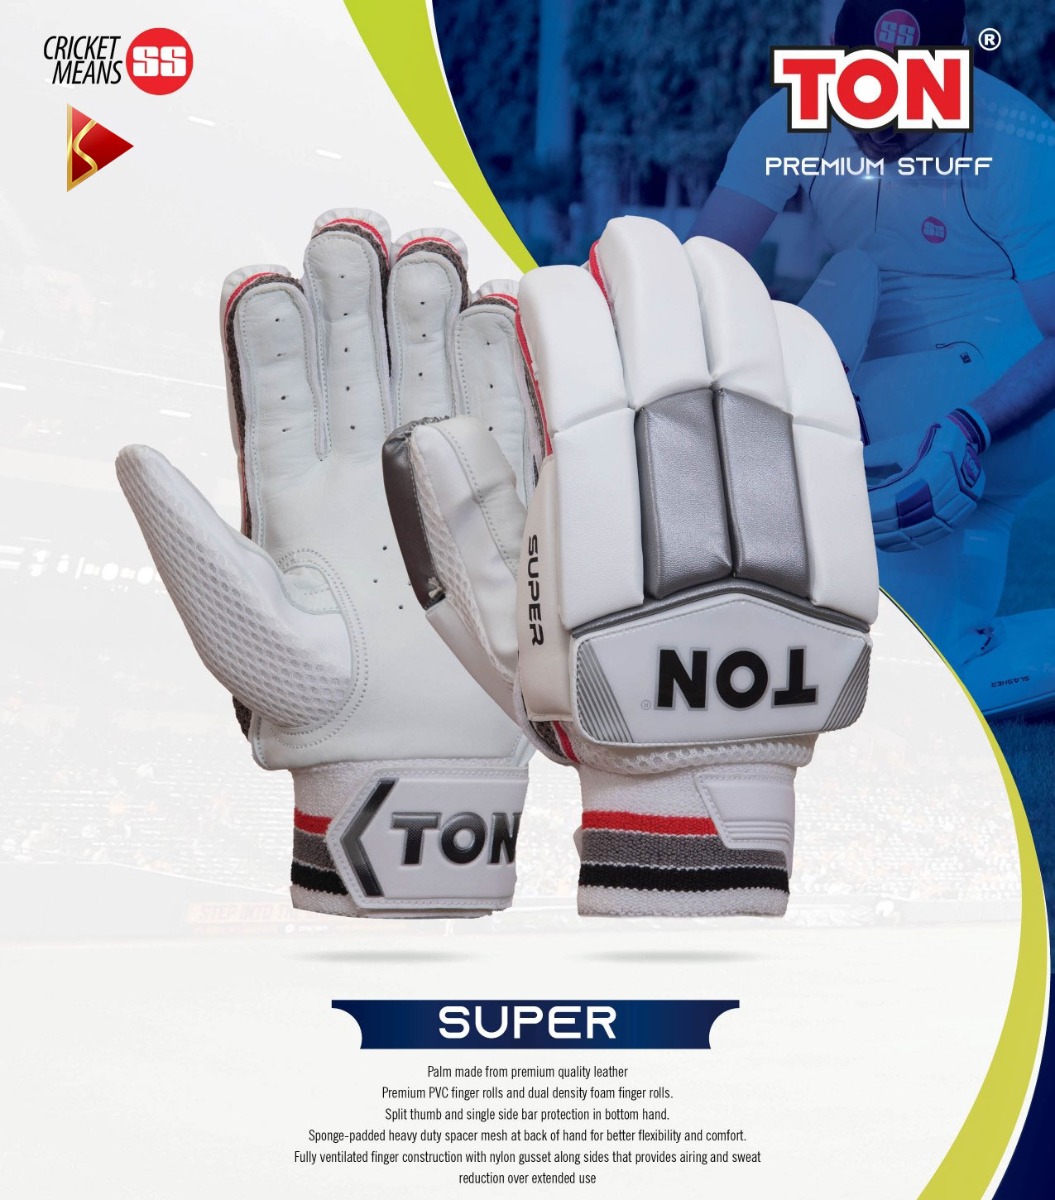 SS Ton Super Batting Gloves Features